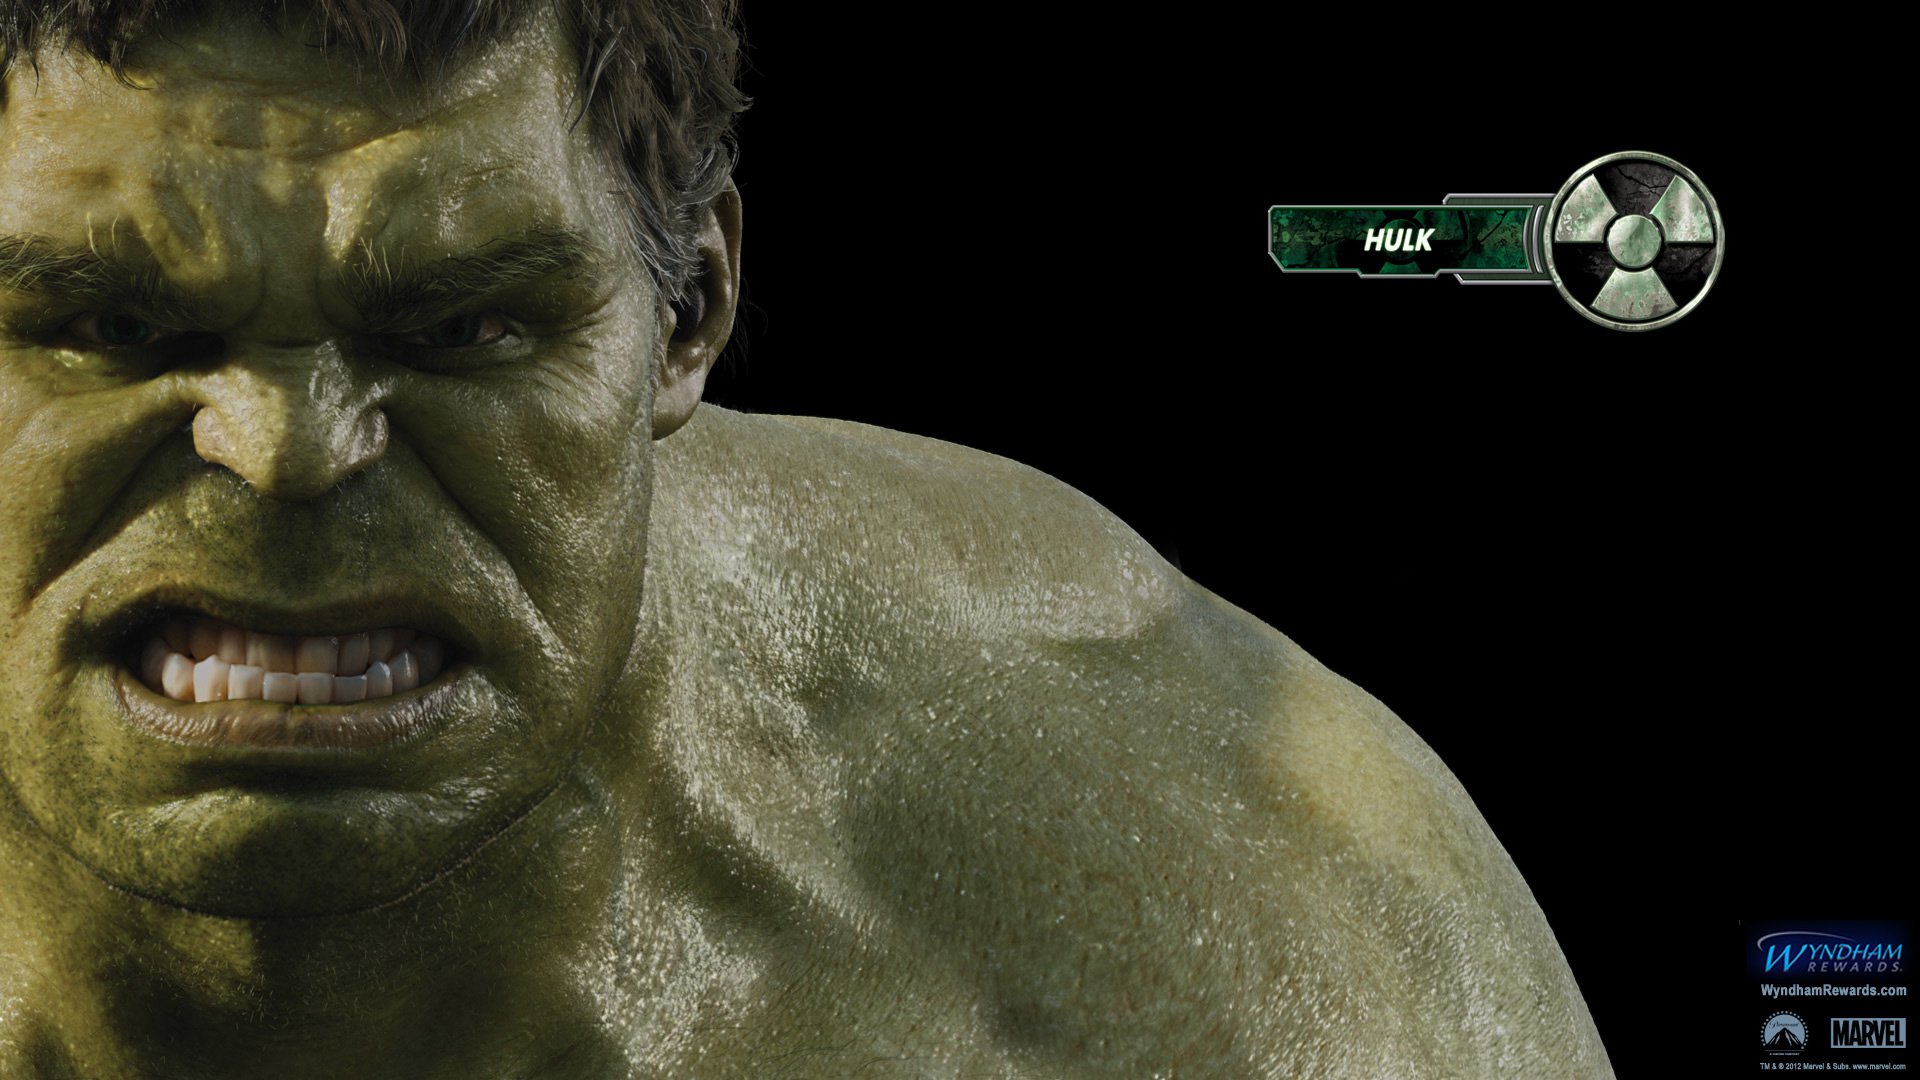 fonds d'écran hulk : tous les wallpapers hulk